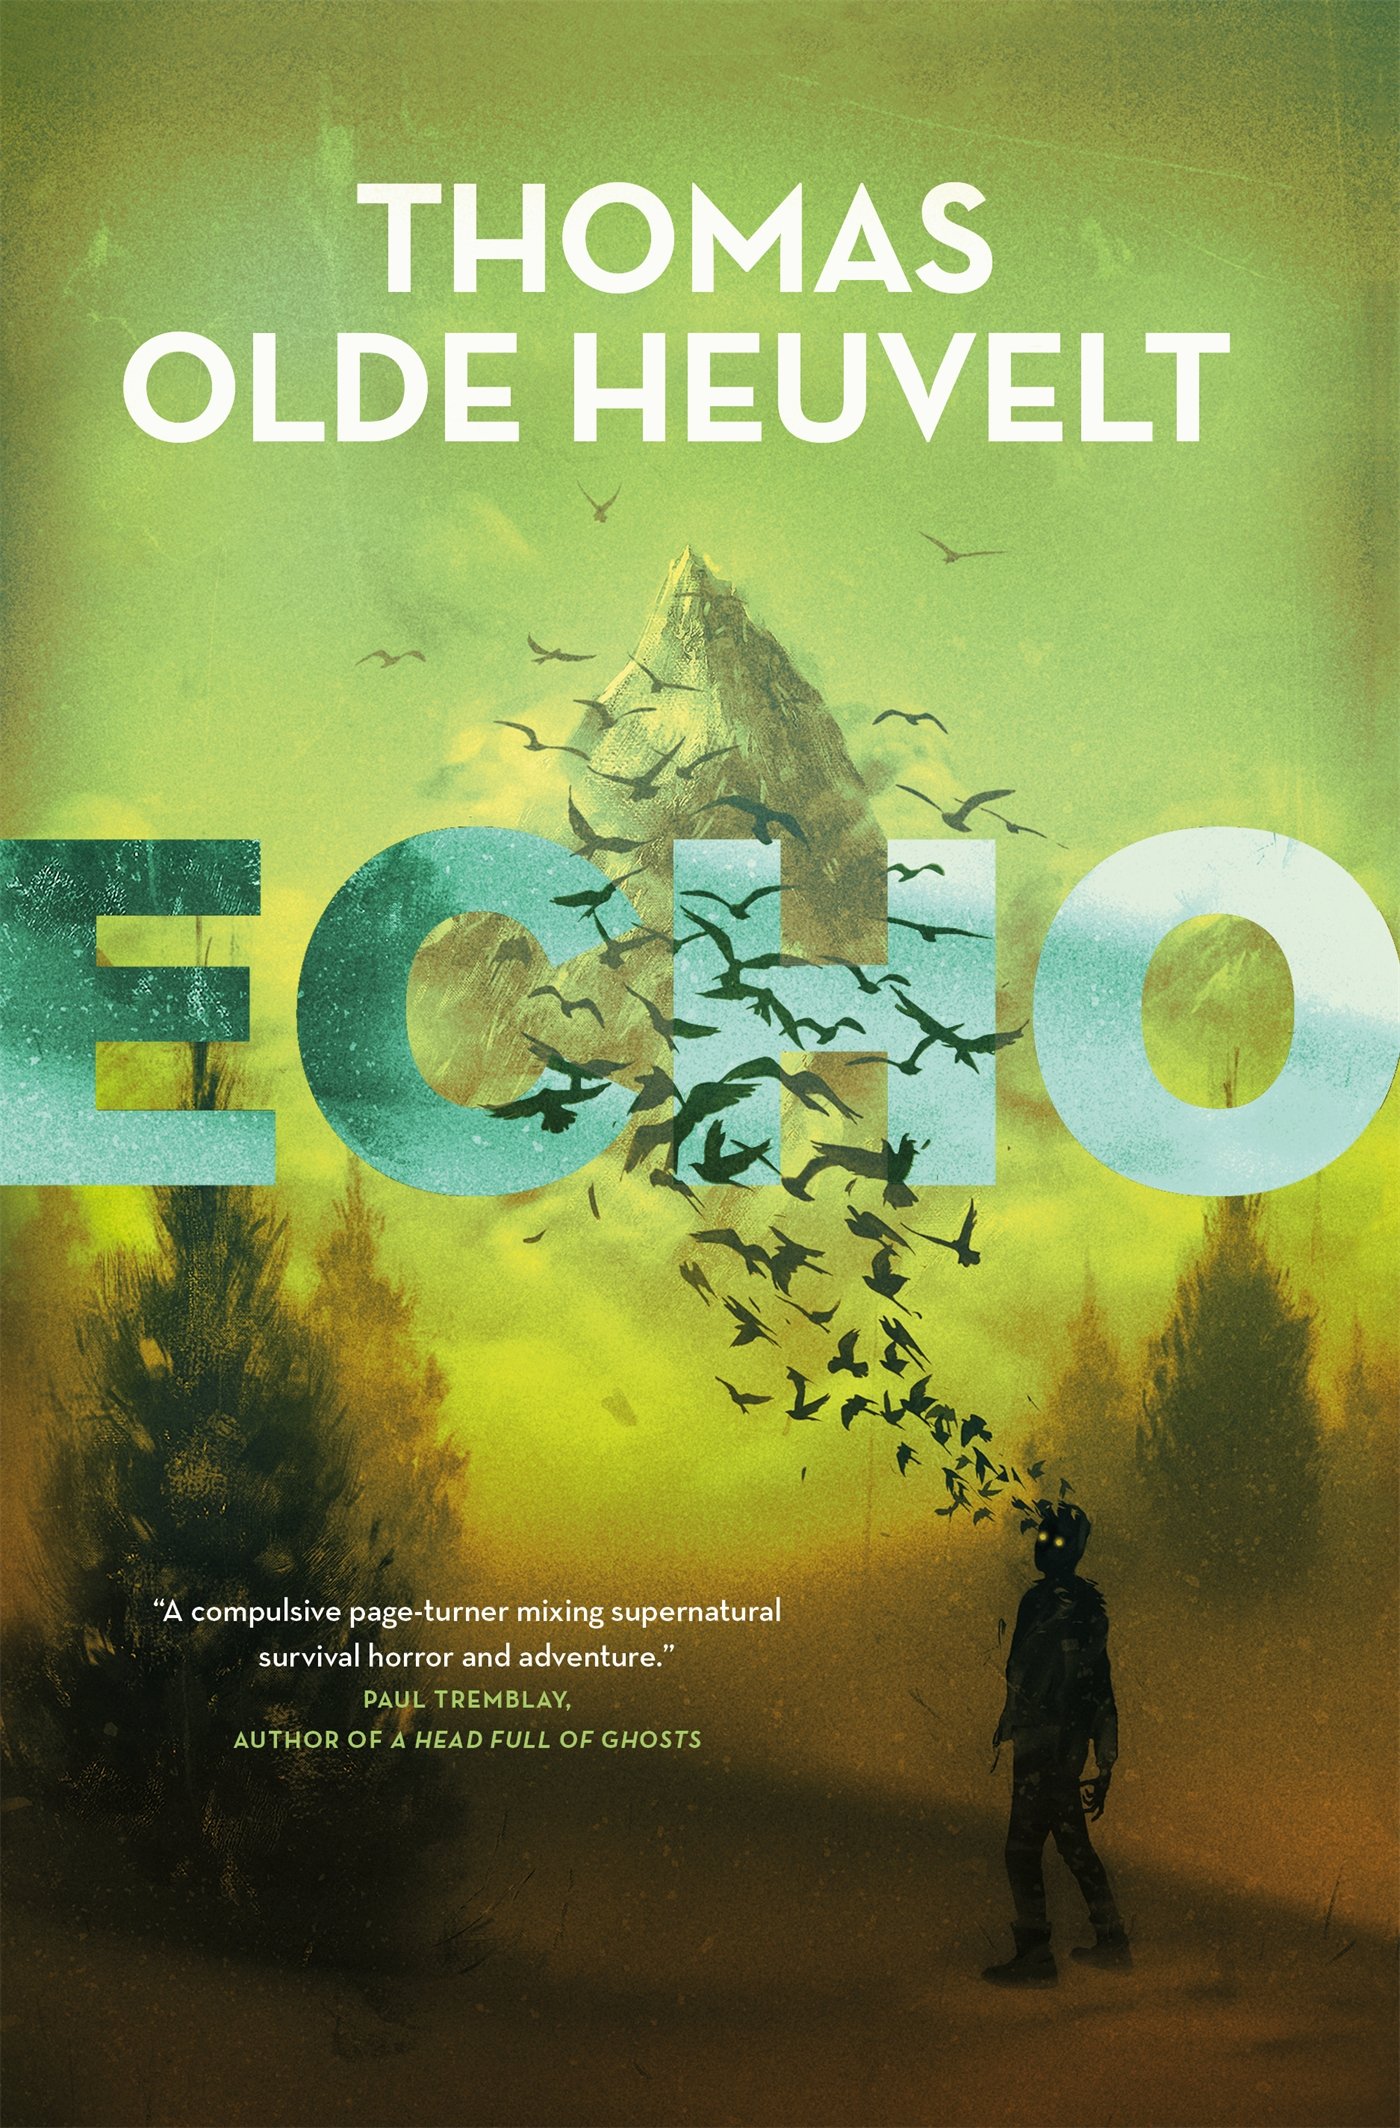 Olde Heuvelt, Thomas - Echo cover, Tor US, FINAL.jpg